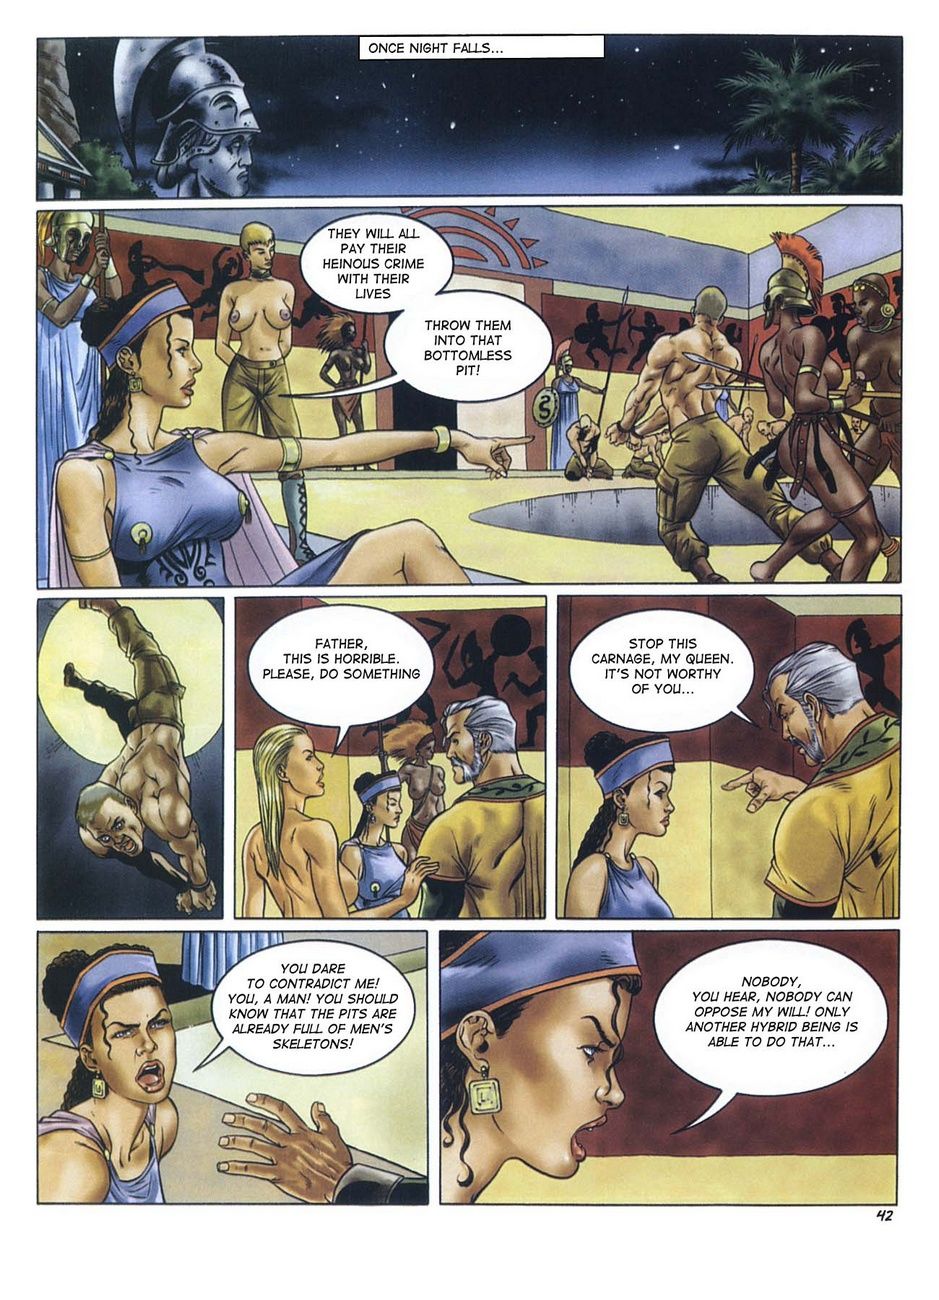 Lara Jones 1 - The Amazons - part 3 page 1